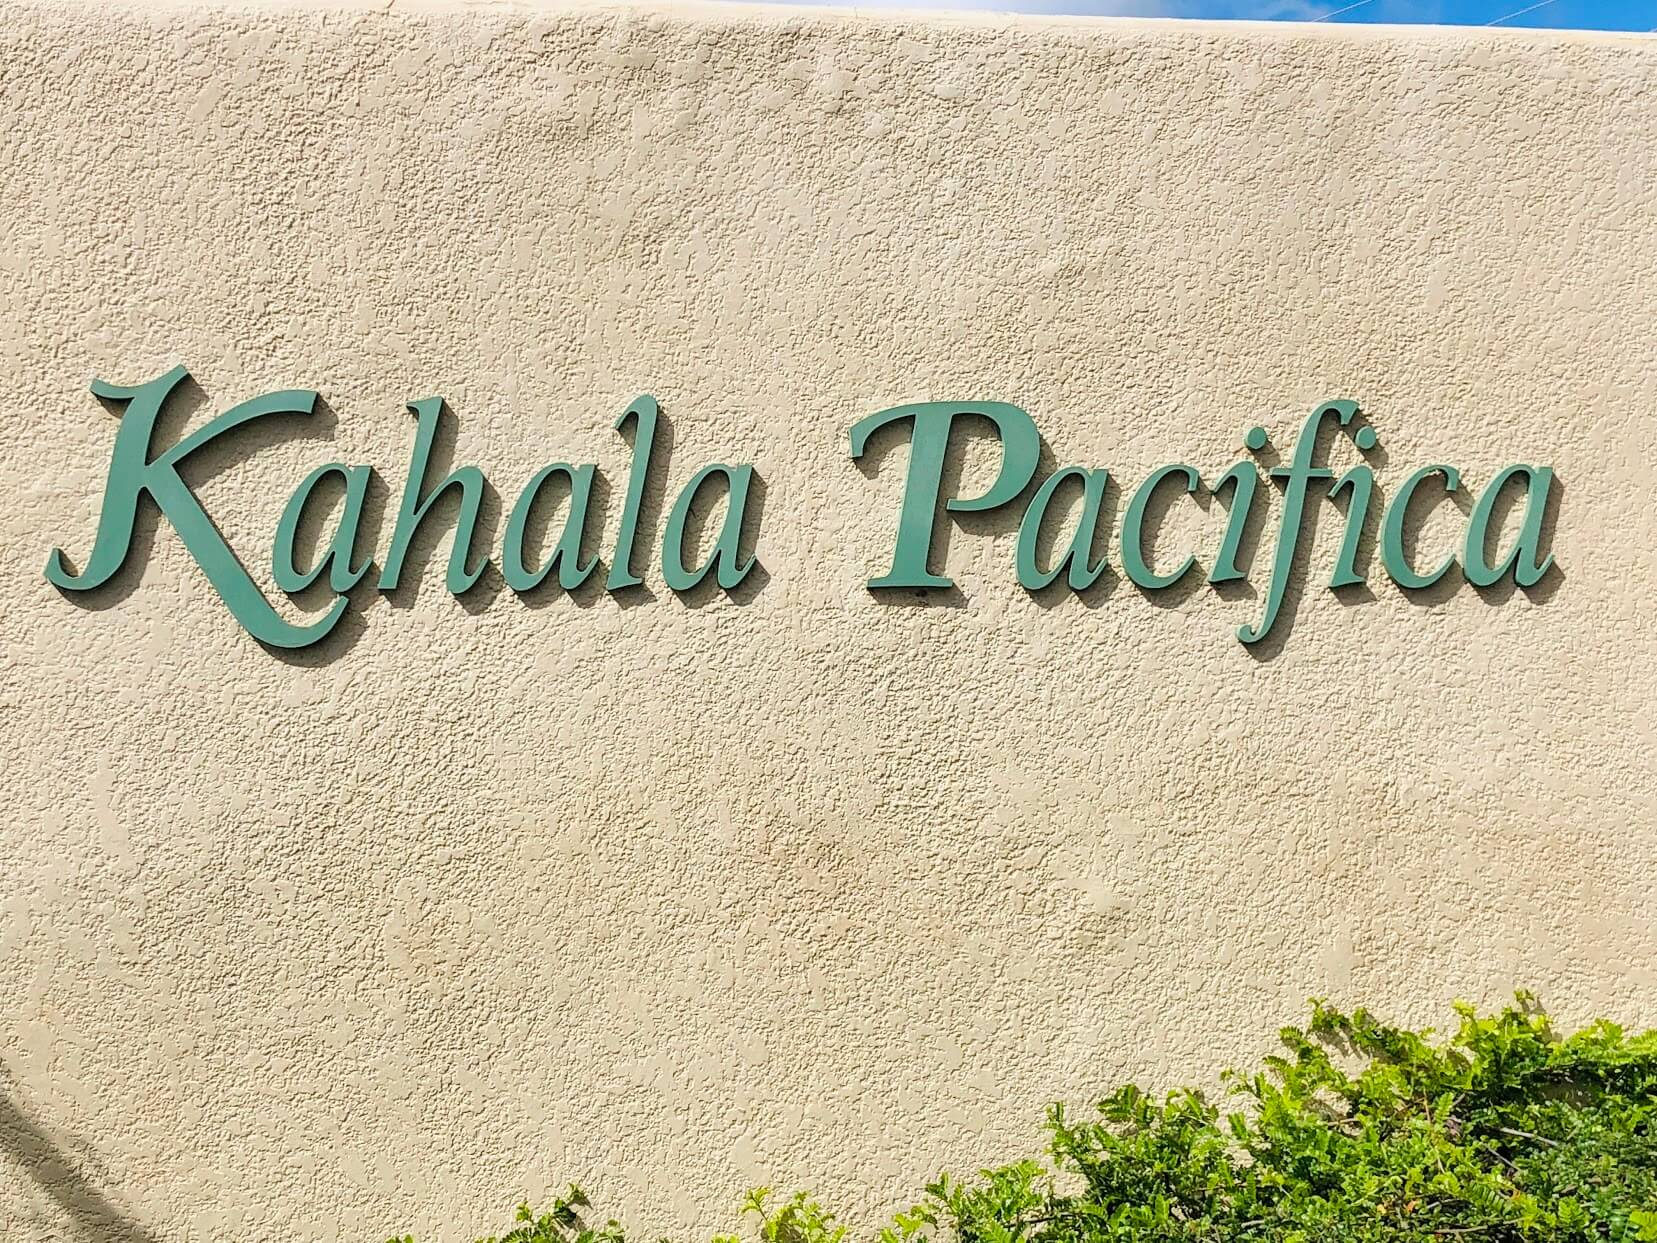 Kahala Pacificaの看板